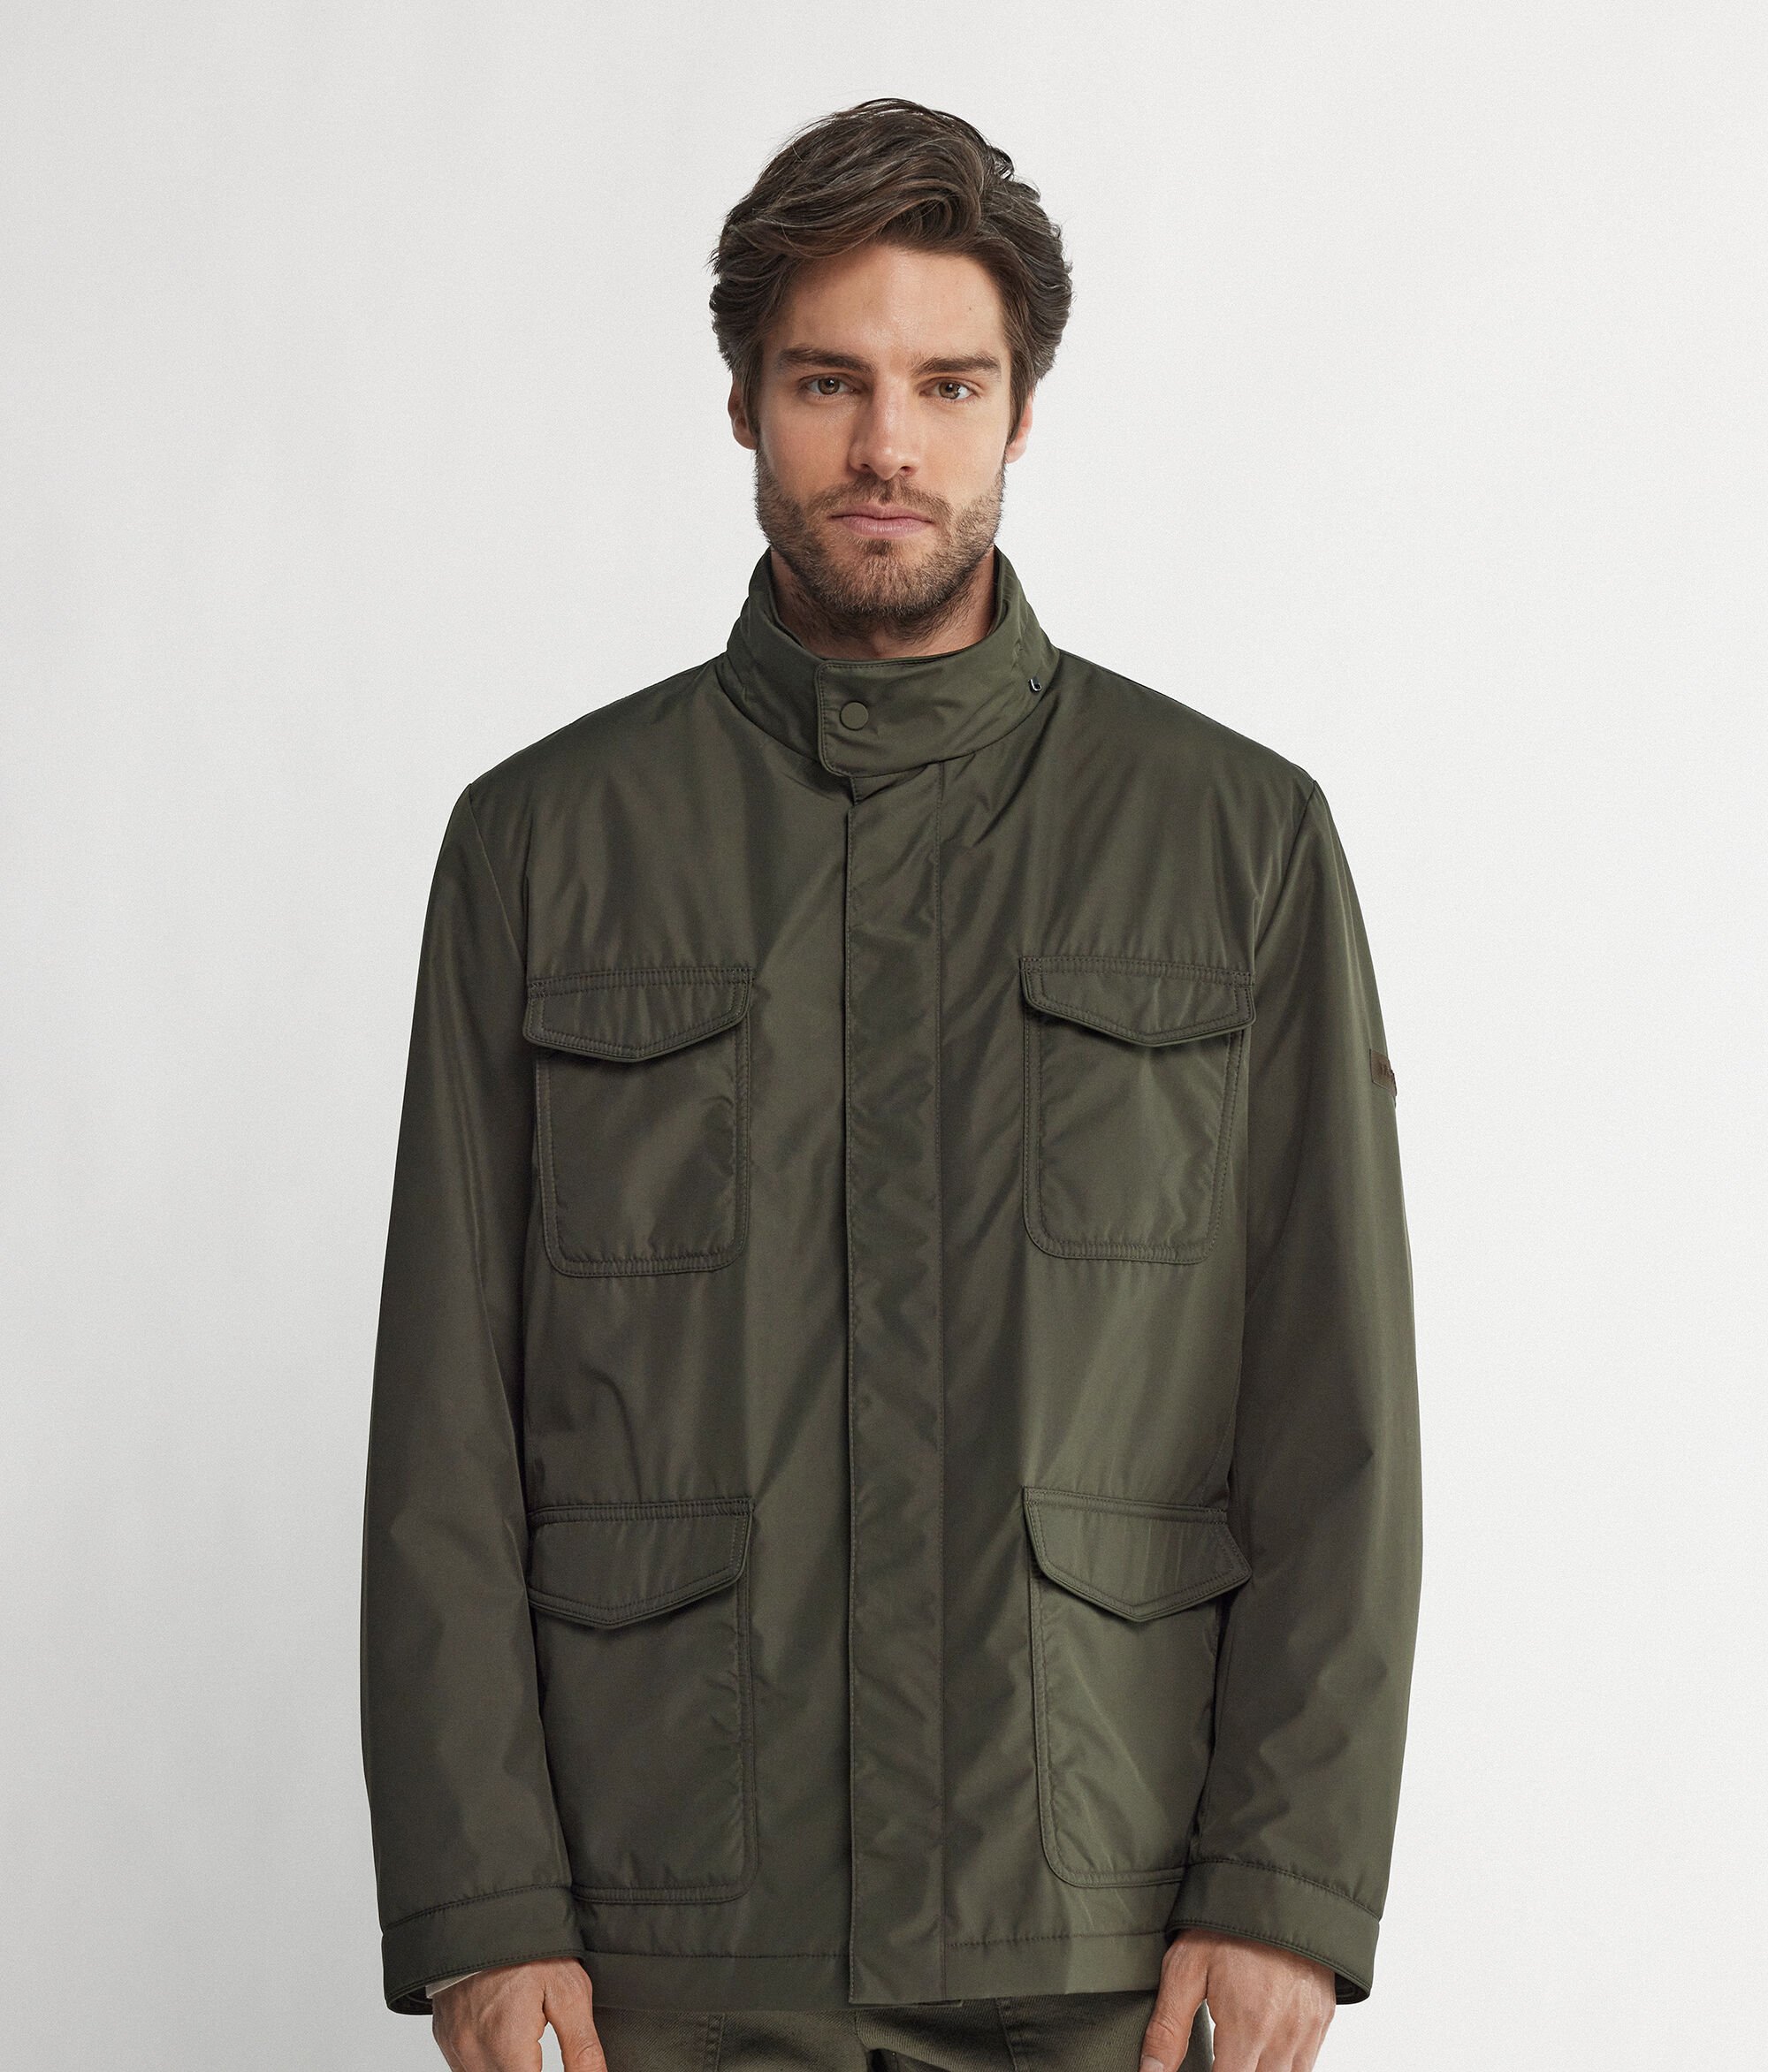 Cashmere Technical Fabric Safari Jacket